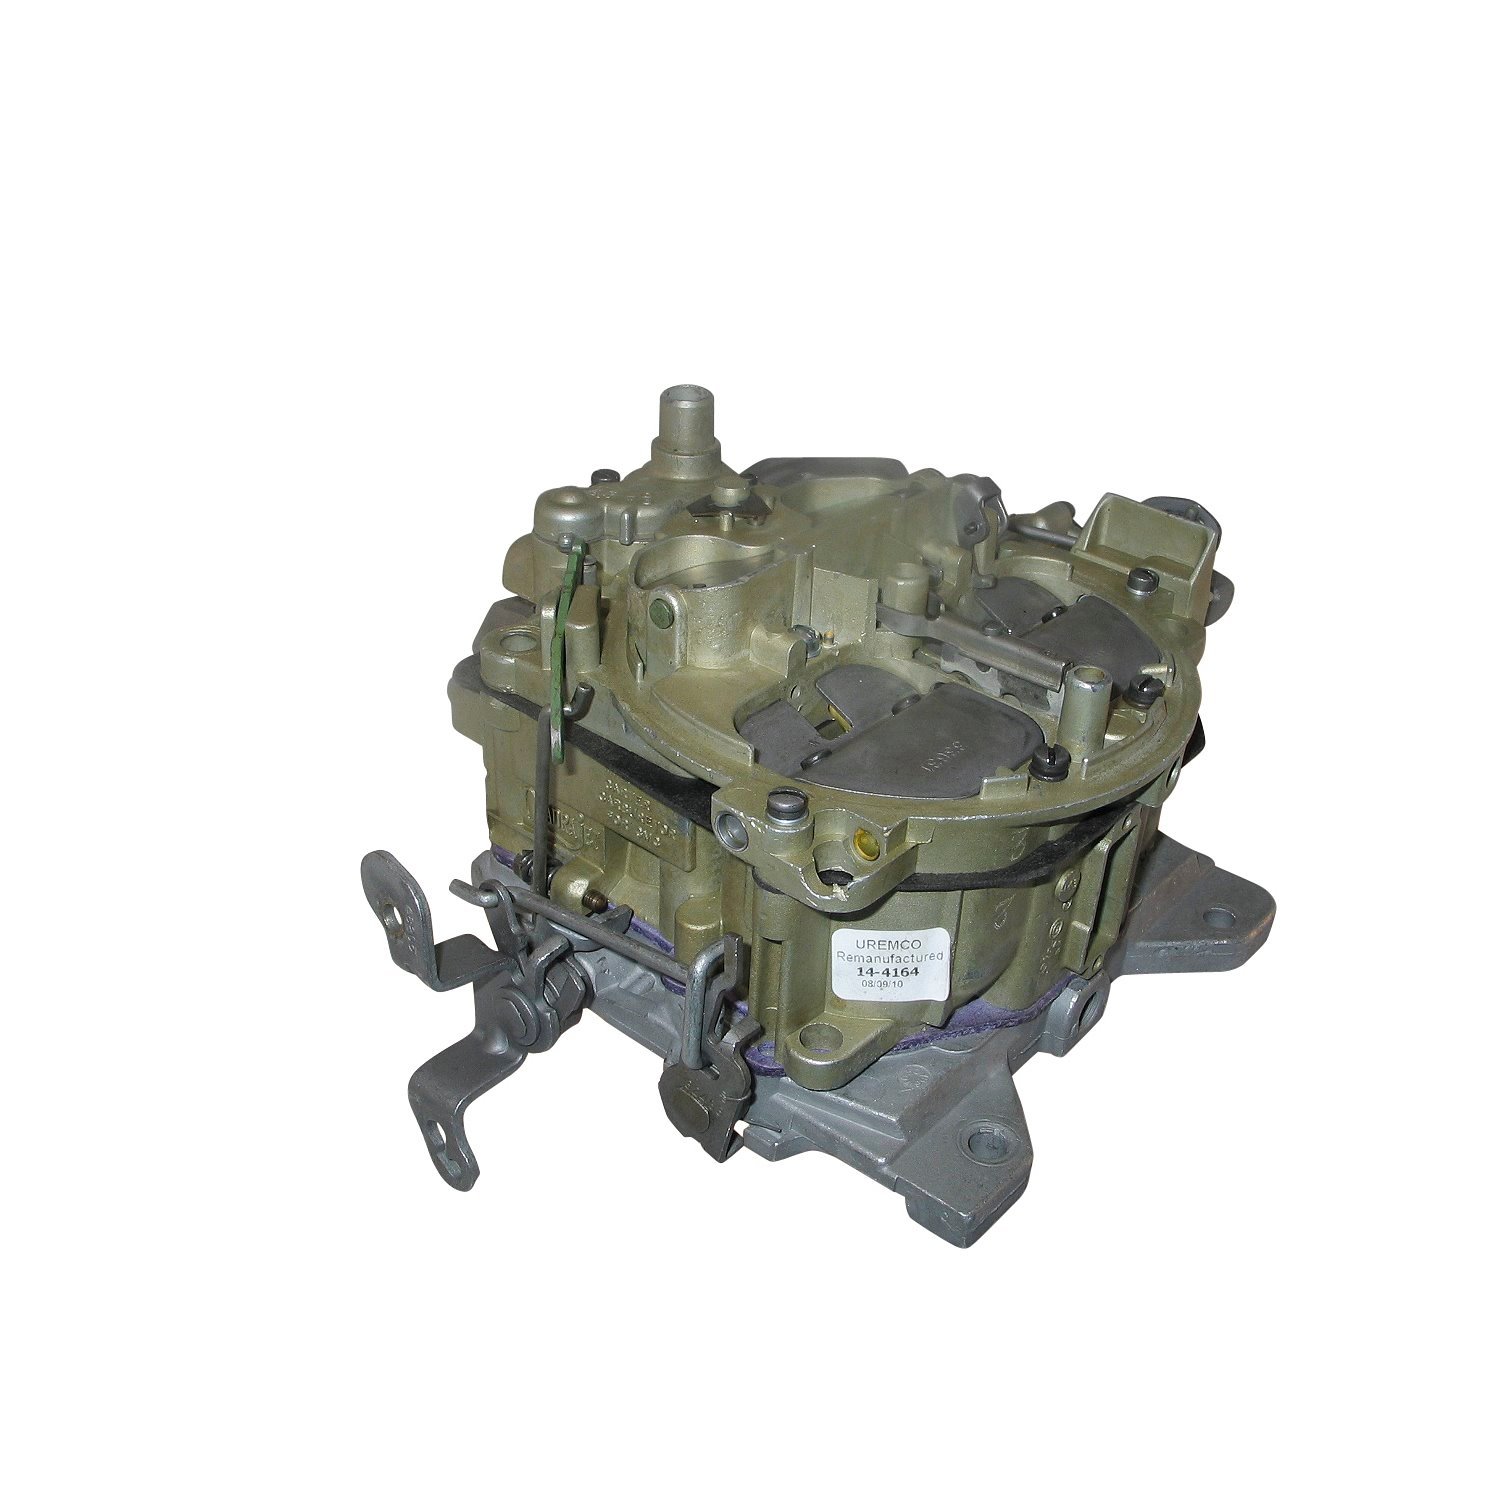 14-4164 Rochester Remanufactured Carburetor, 4MC-Style